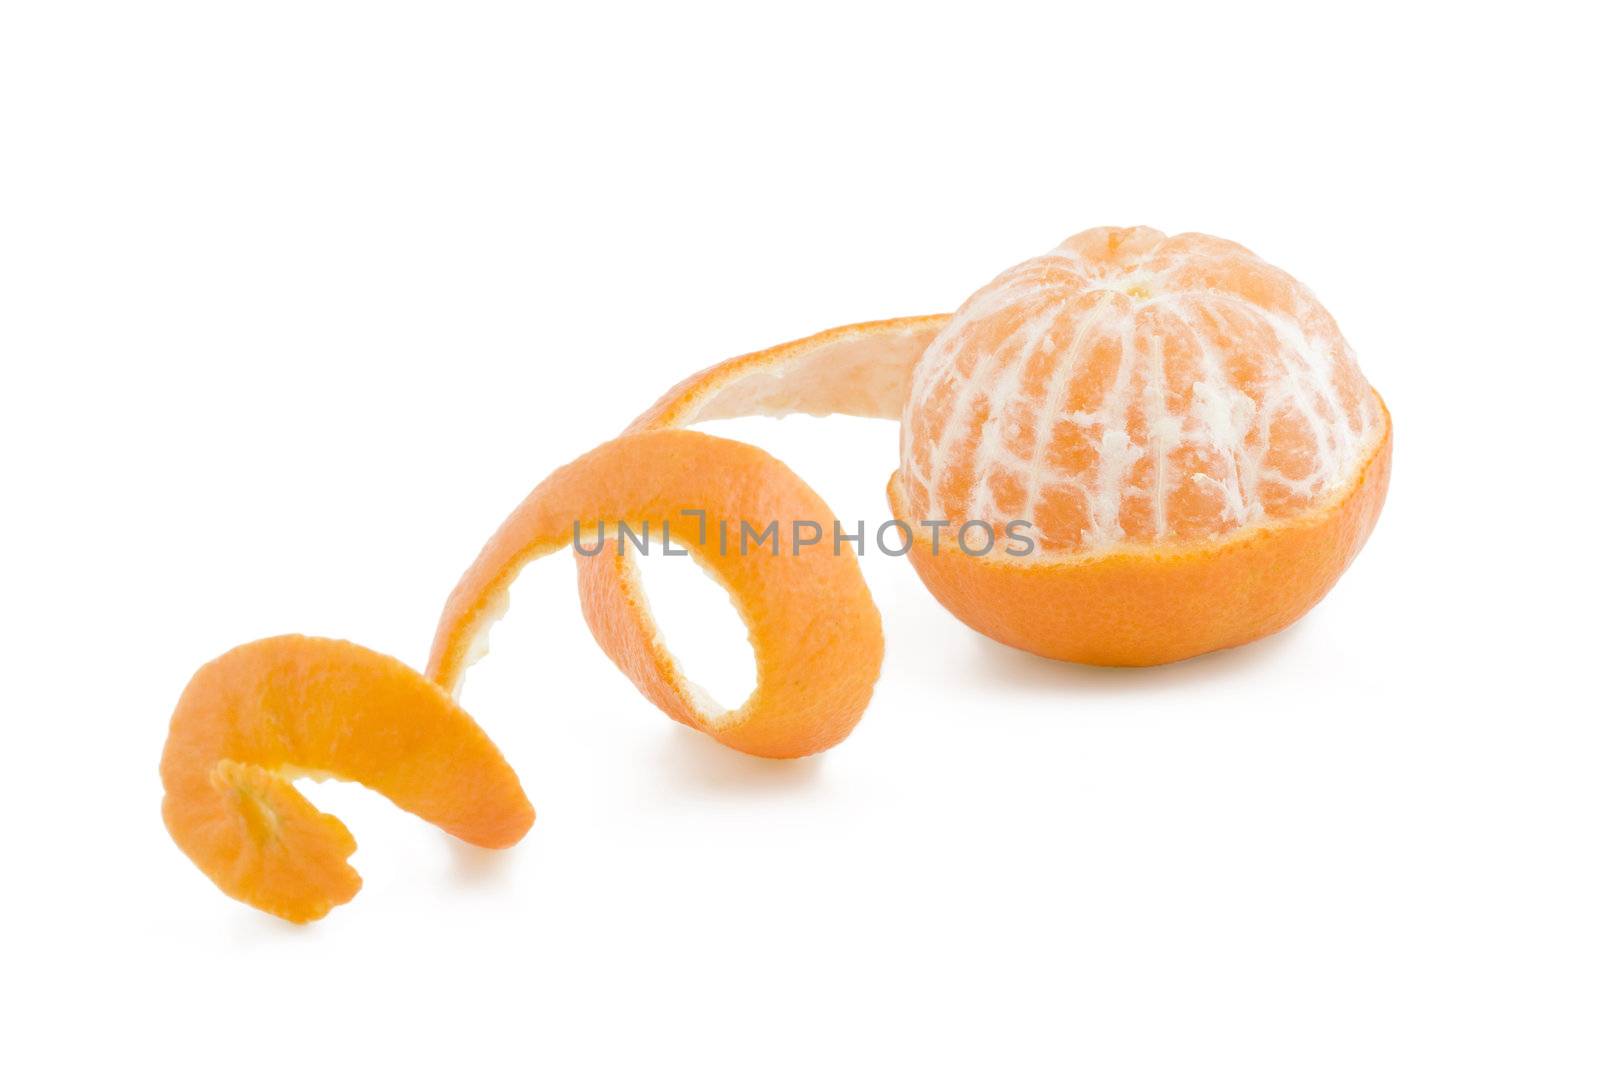 Peeled tangerine by Gbuglok